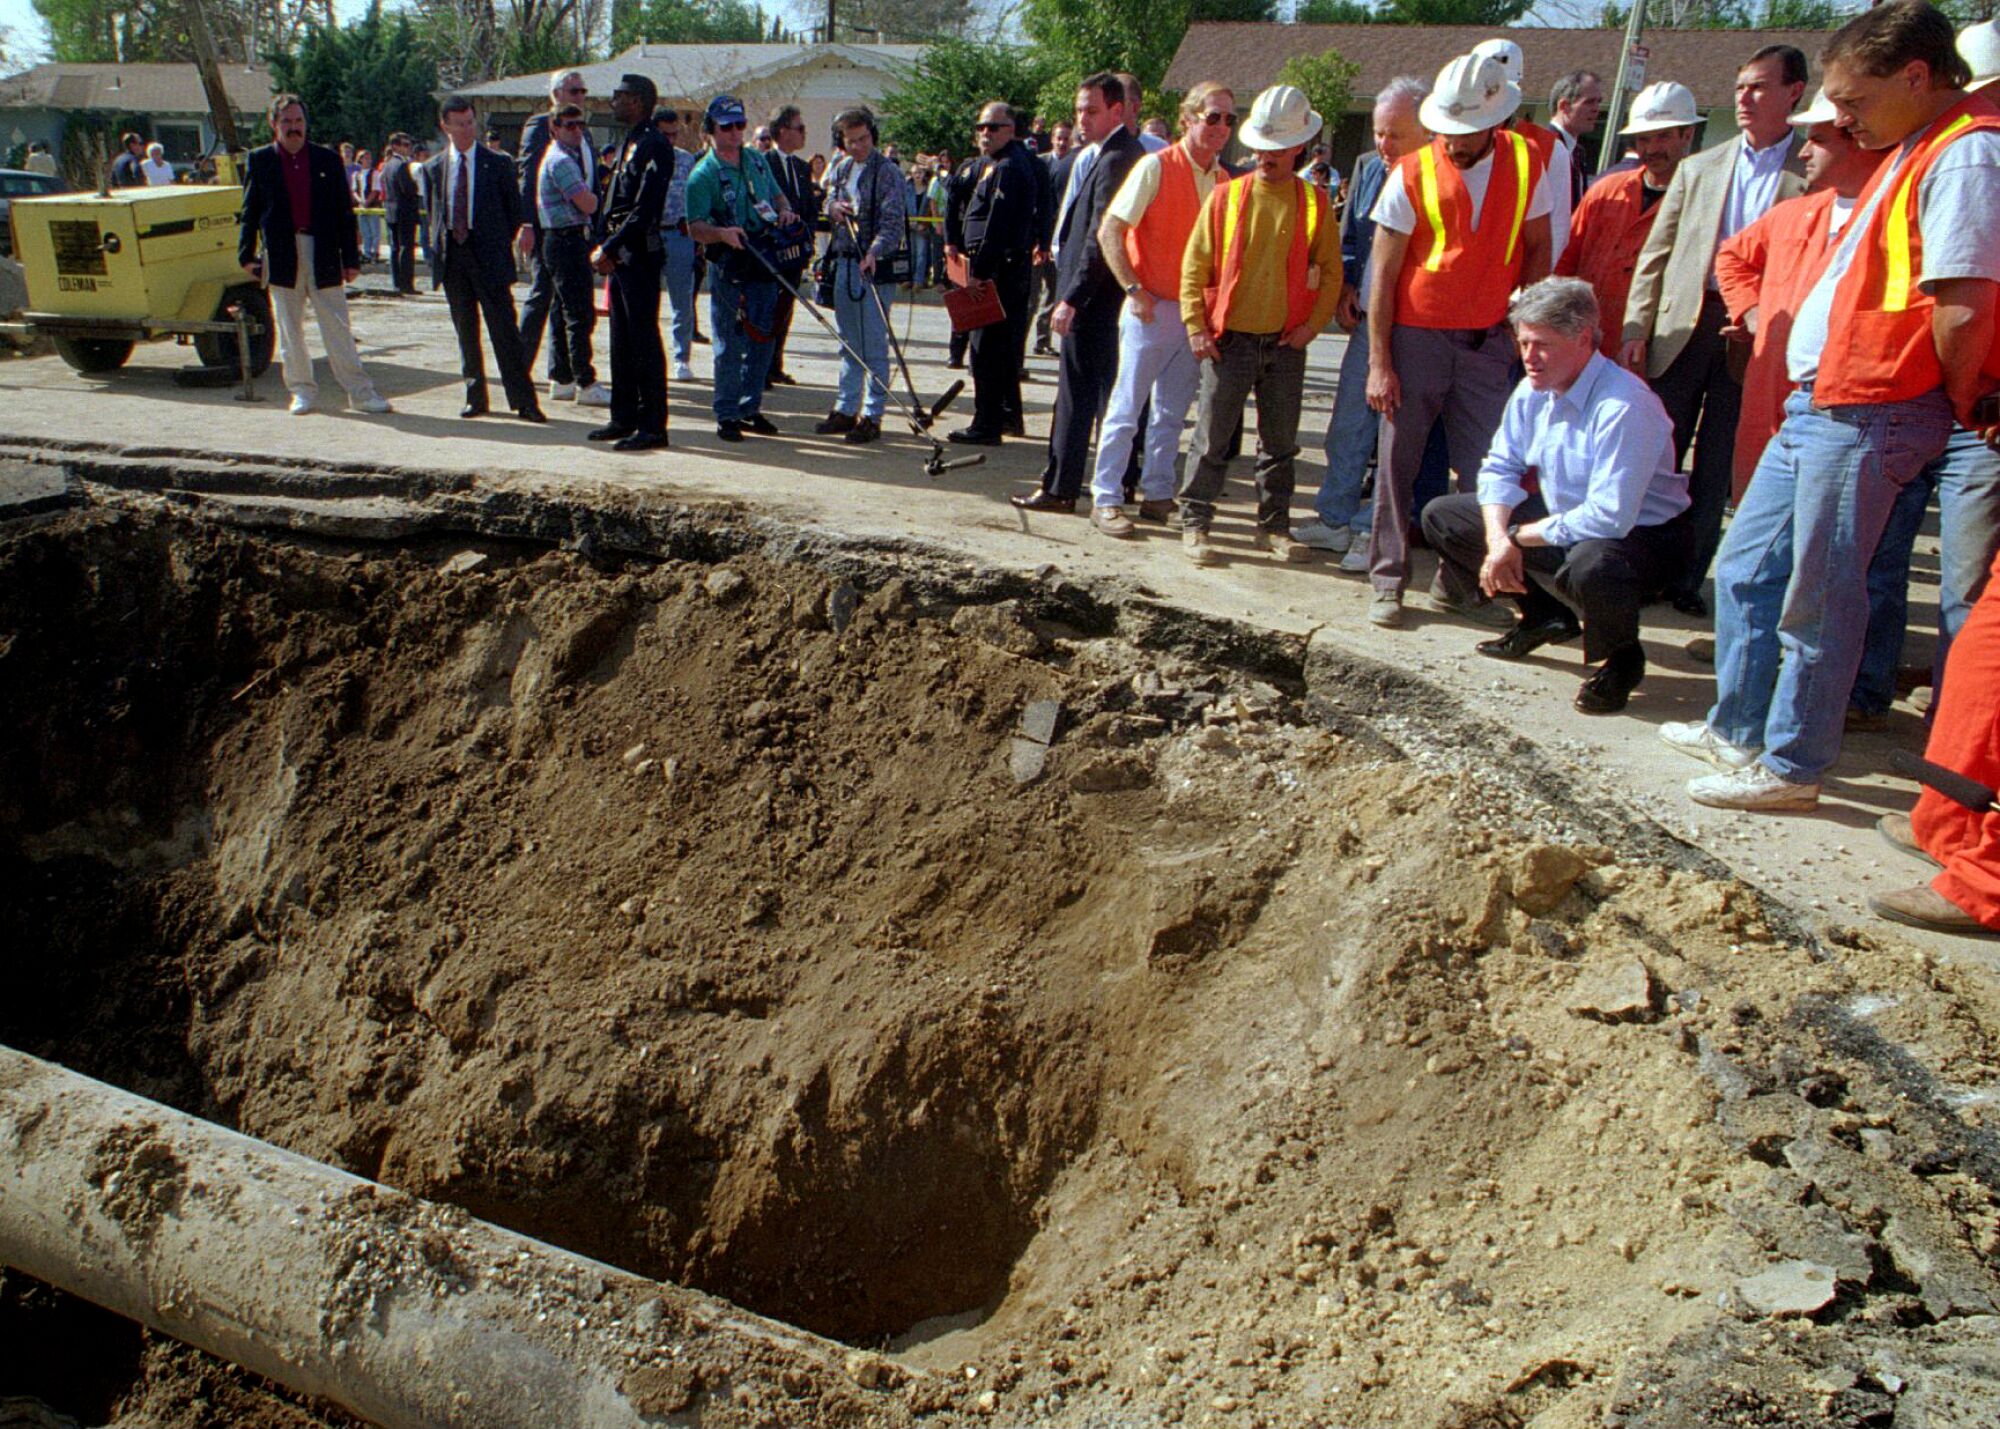 President Bill Clinton surveys damage after the Northridge earthquake